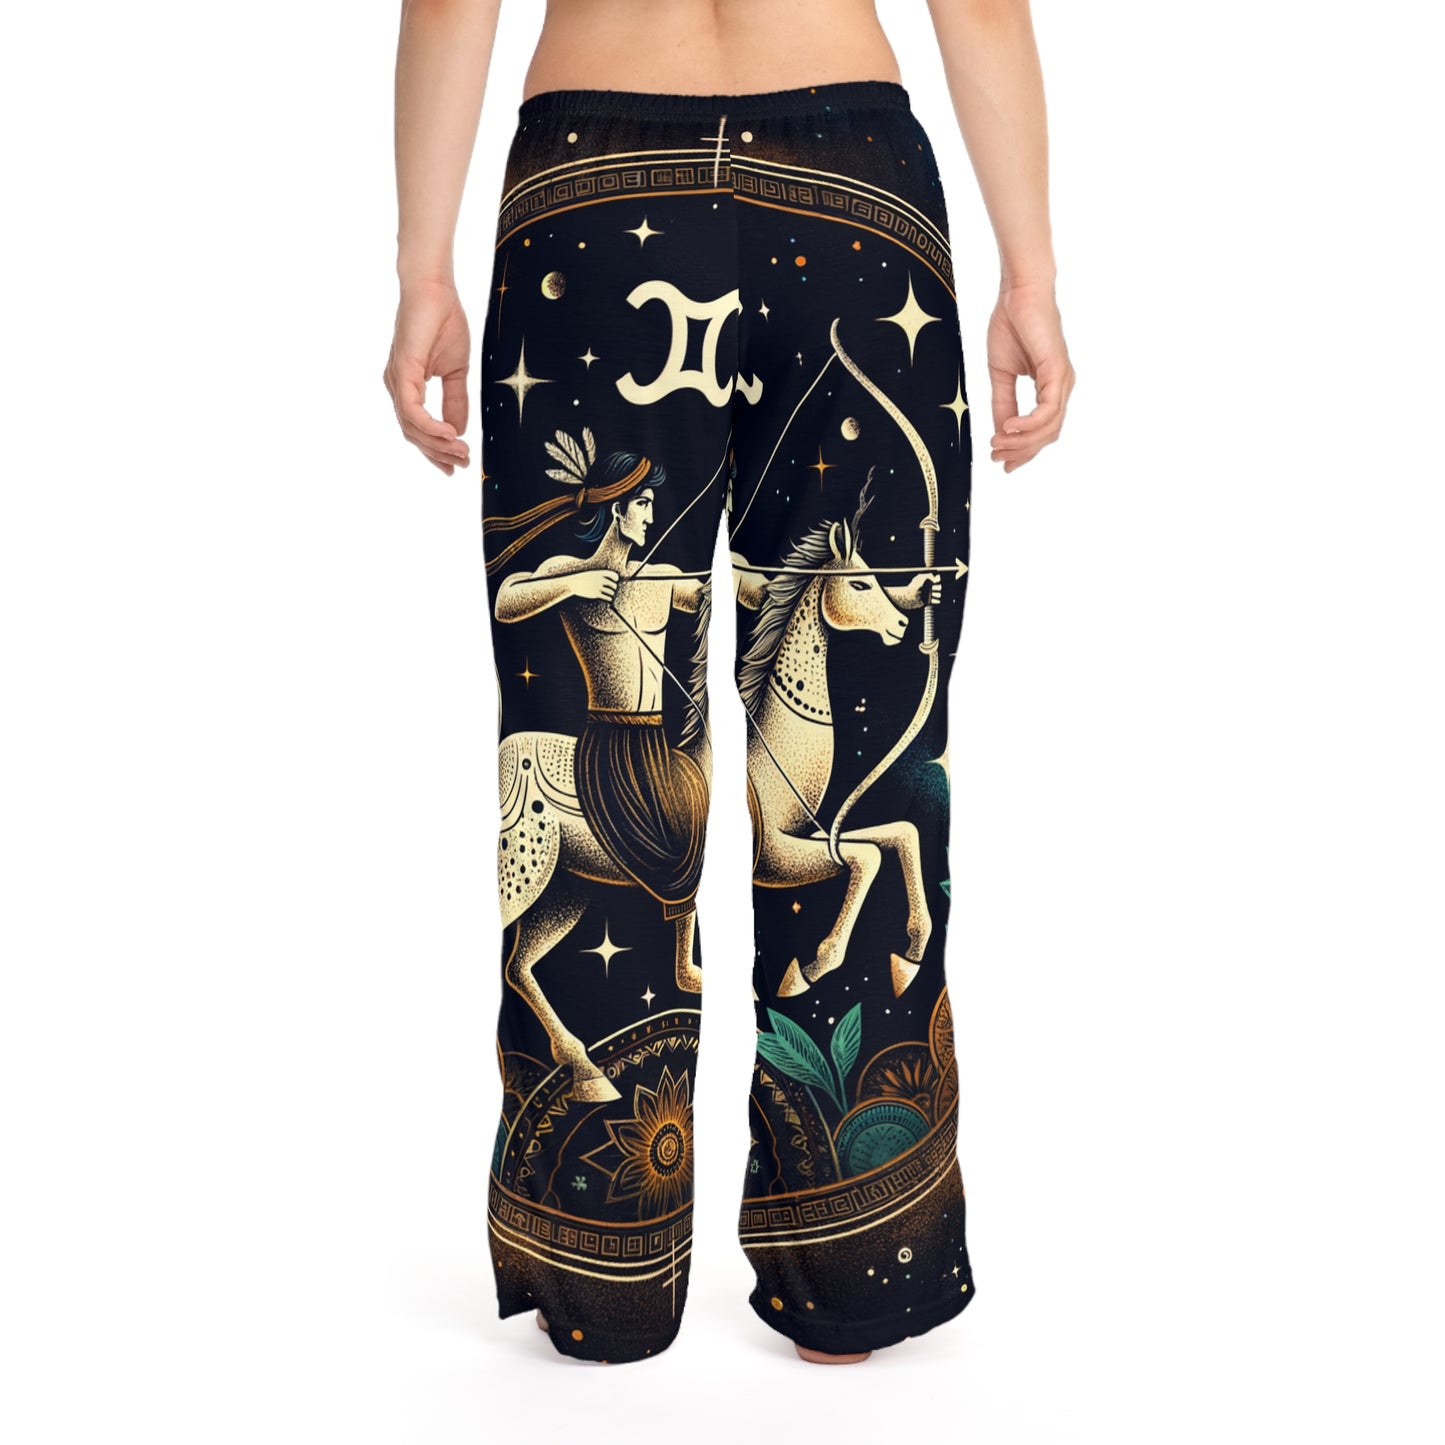 Sagittarius Emblem - Women lounge pants